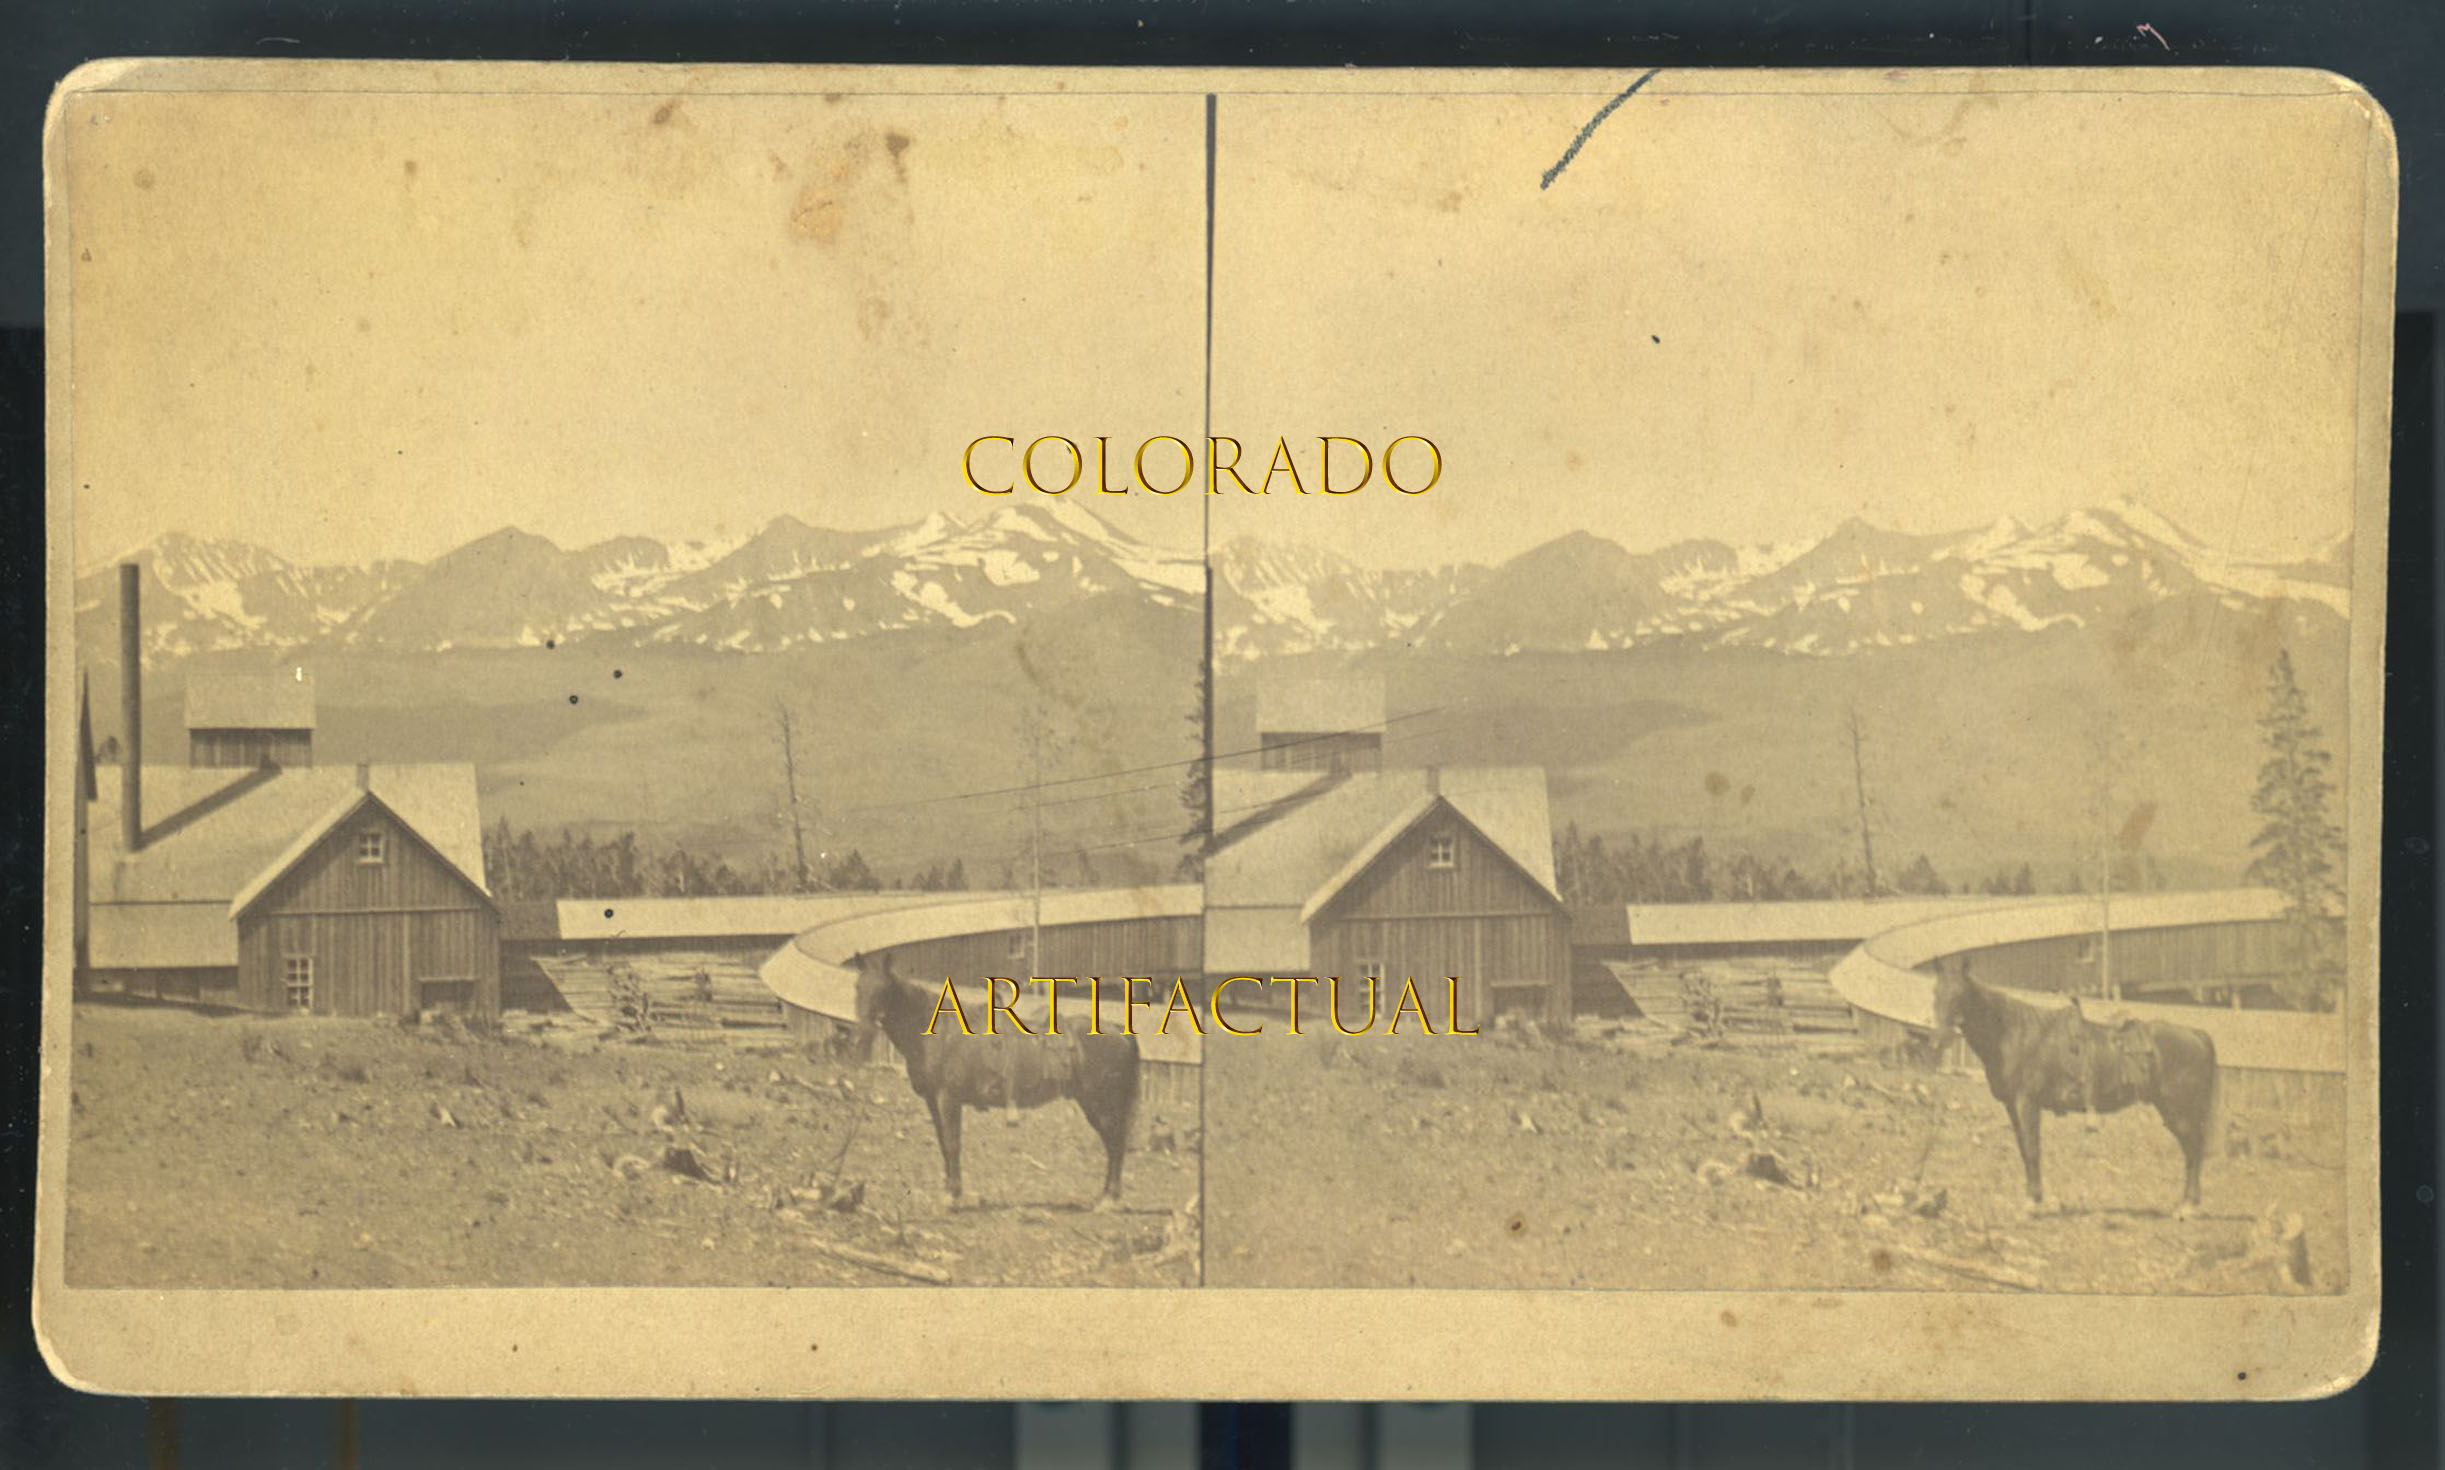 WASHINGTON MINE, near BRECKENRIDGE, COLORADO, W.D. Churchell stereoview photograph, 1880